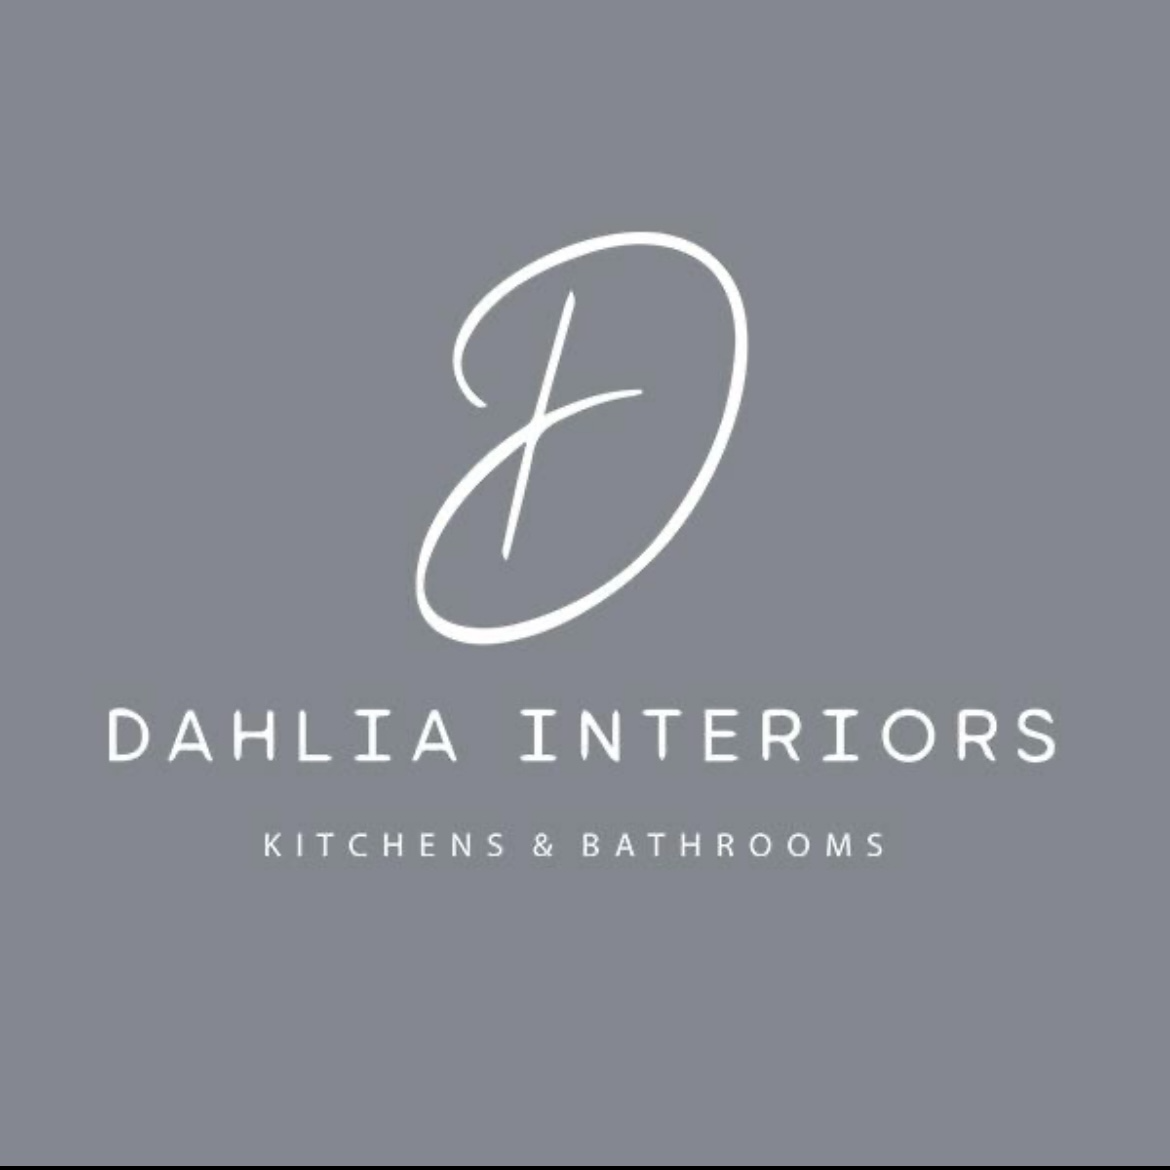 Images Dahlia Interiors Limited